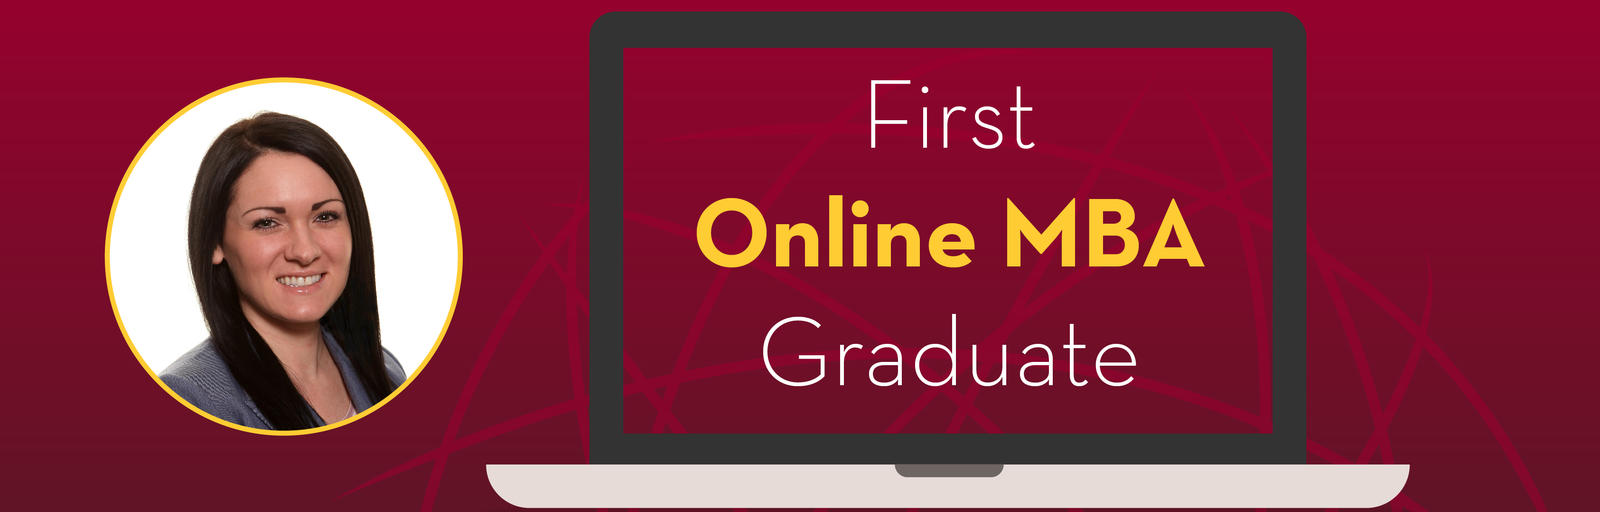 Online MBA Graduate